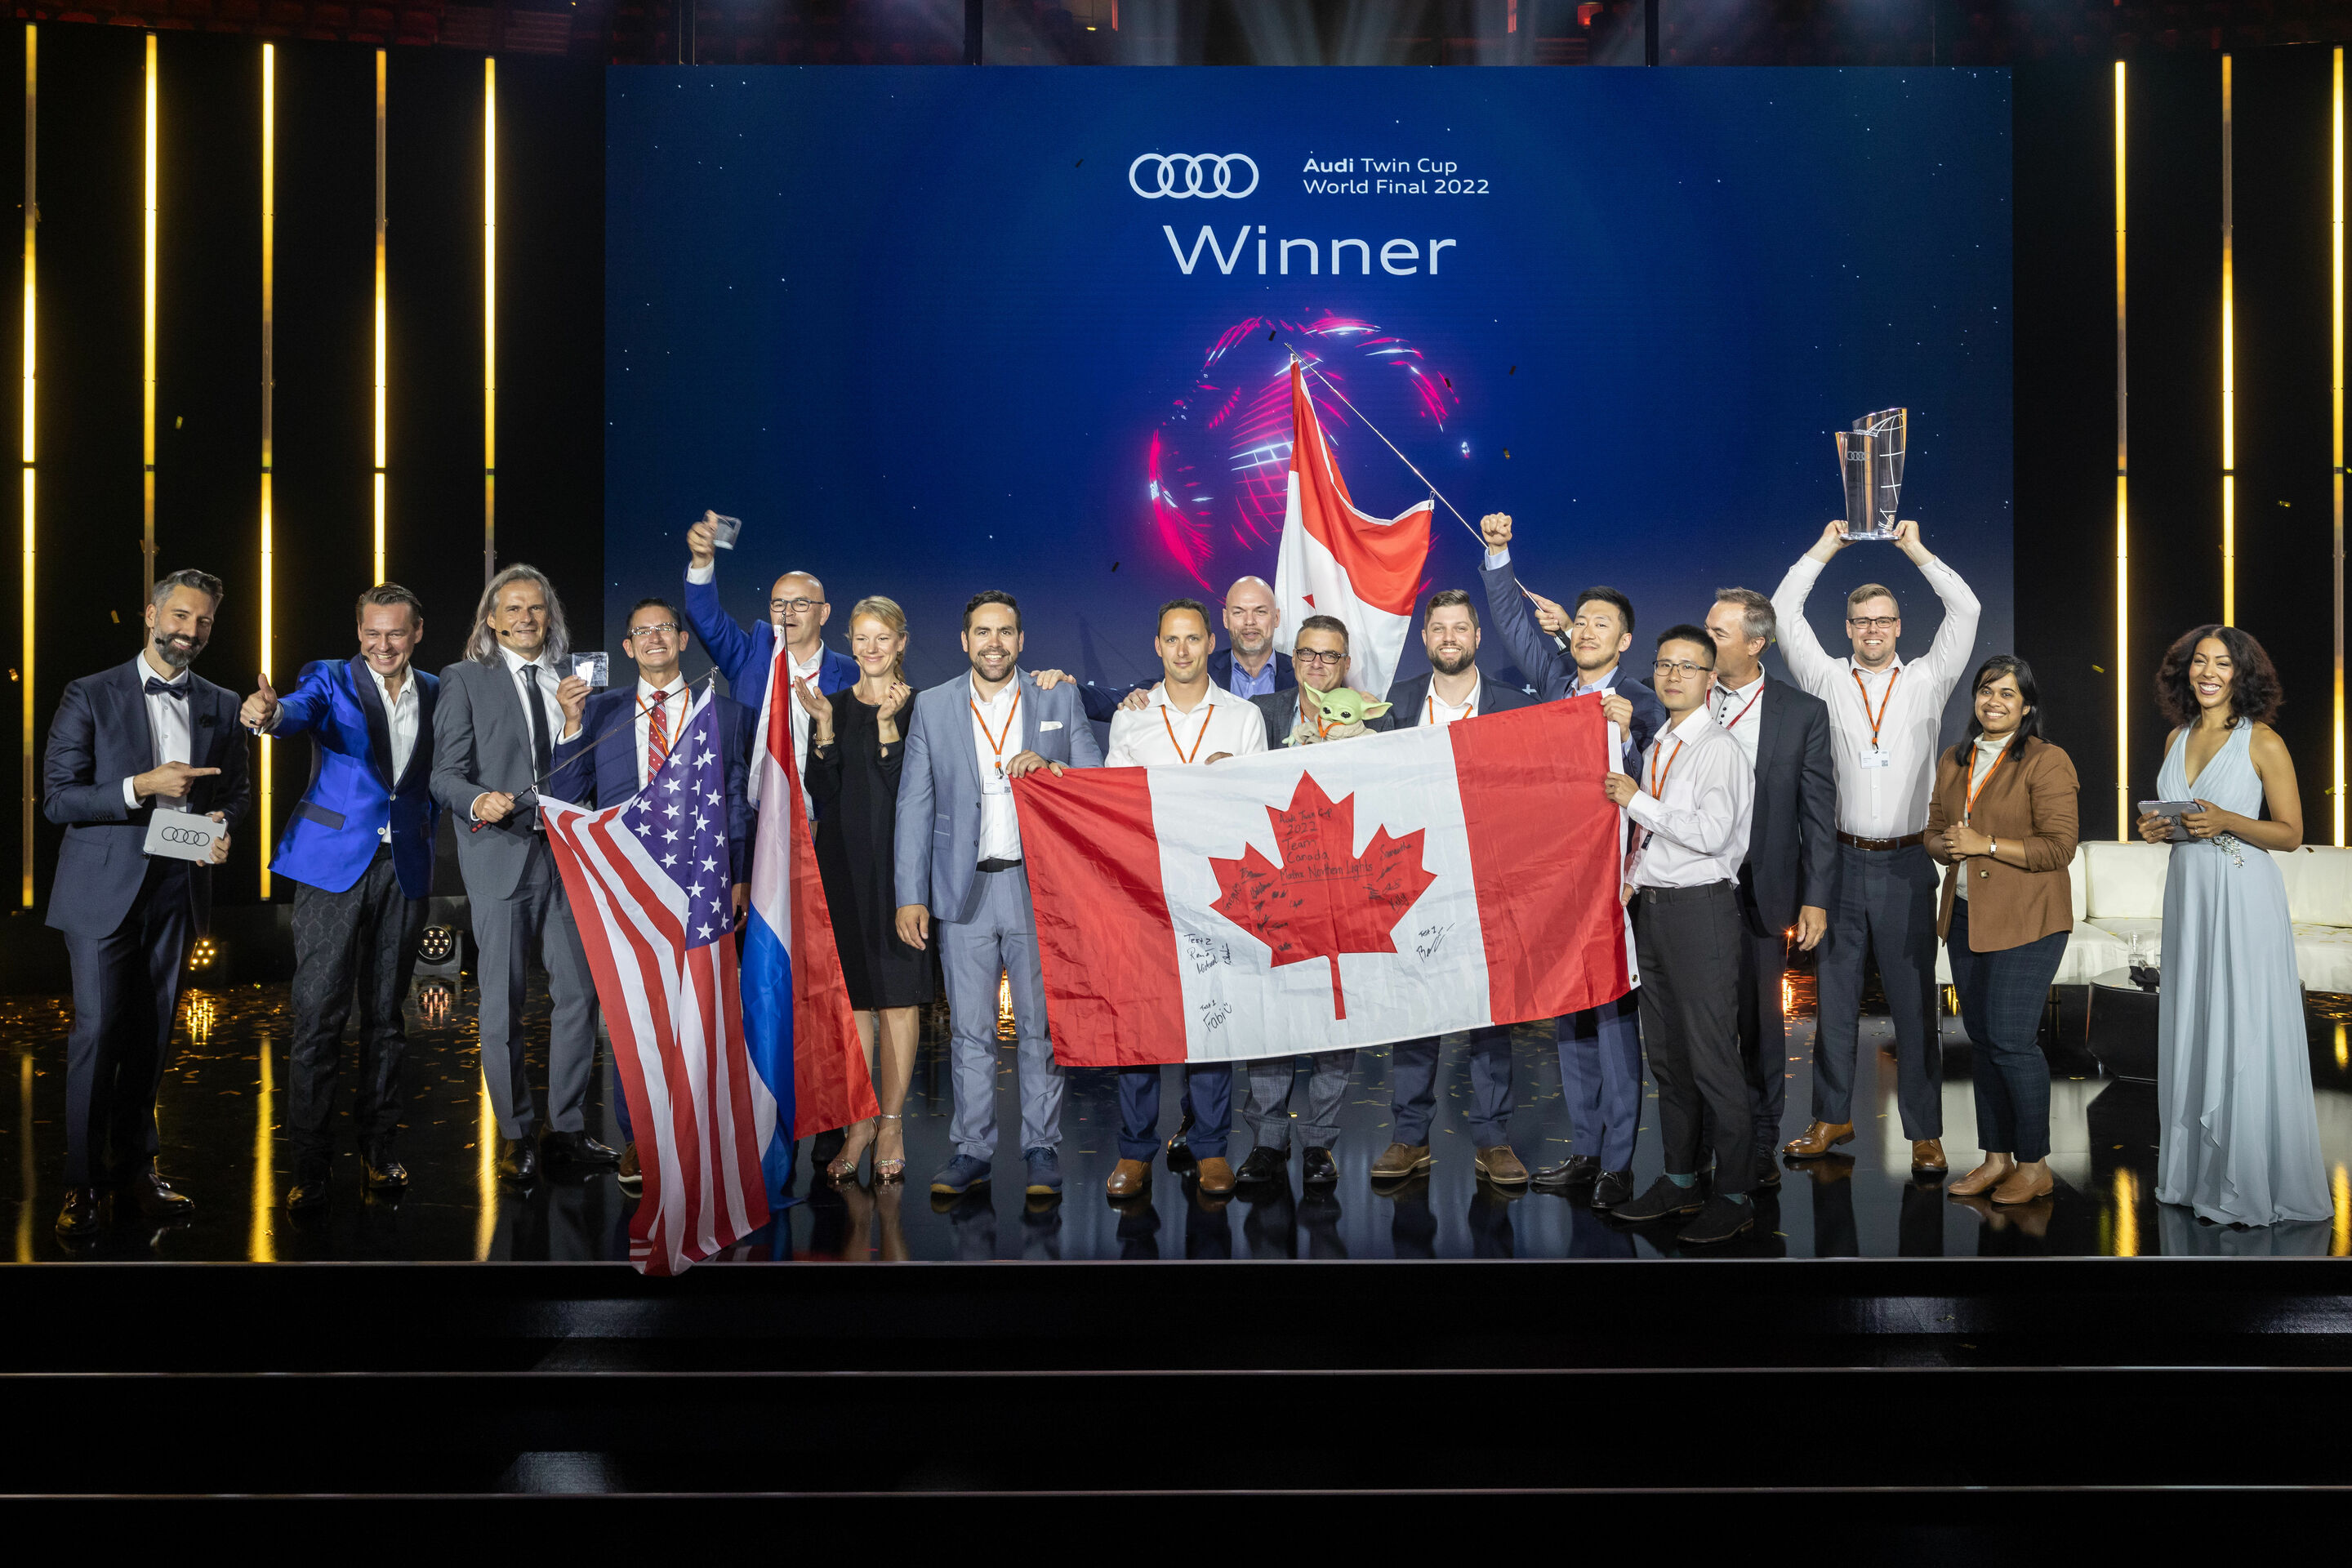 Internationales Audi Twin Cup-Finale 2022: Der beste Audi Service kommt aus Kanada